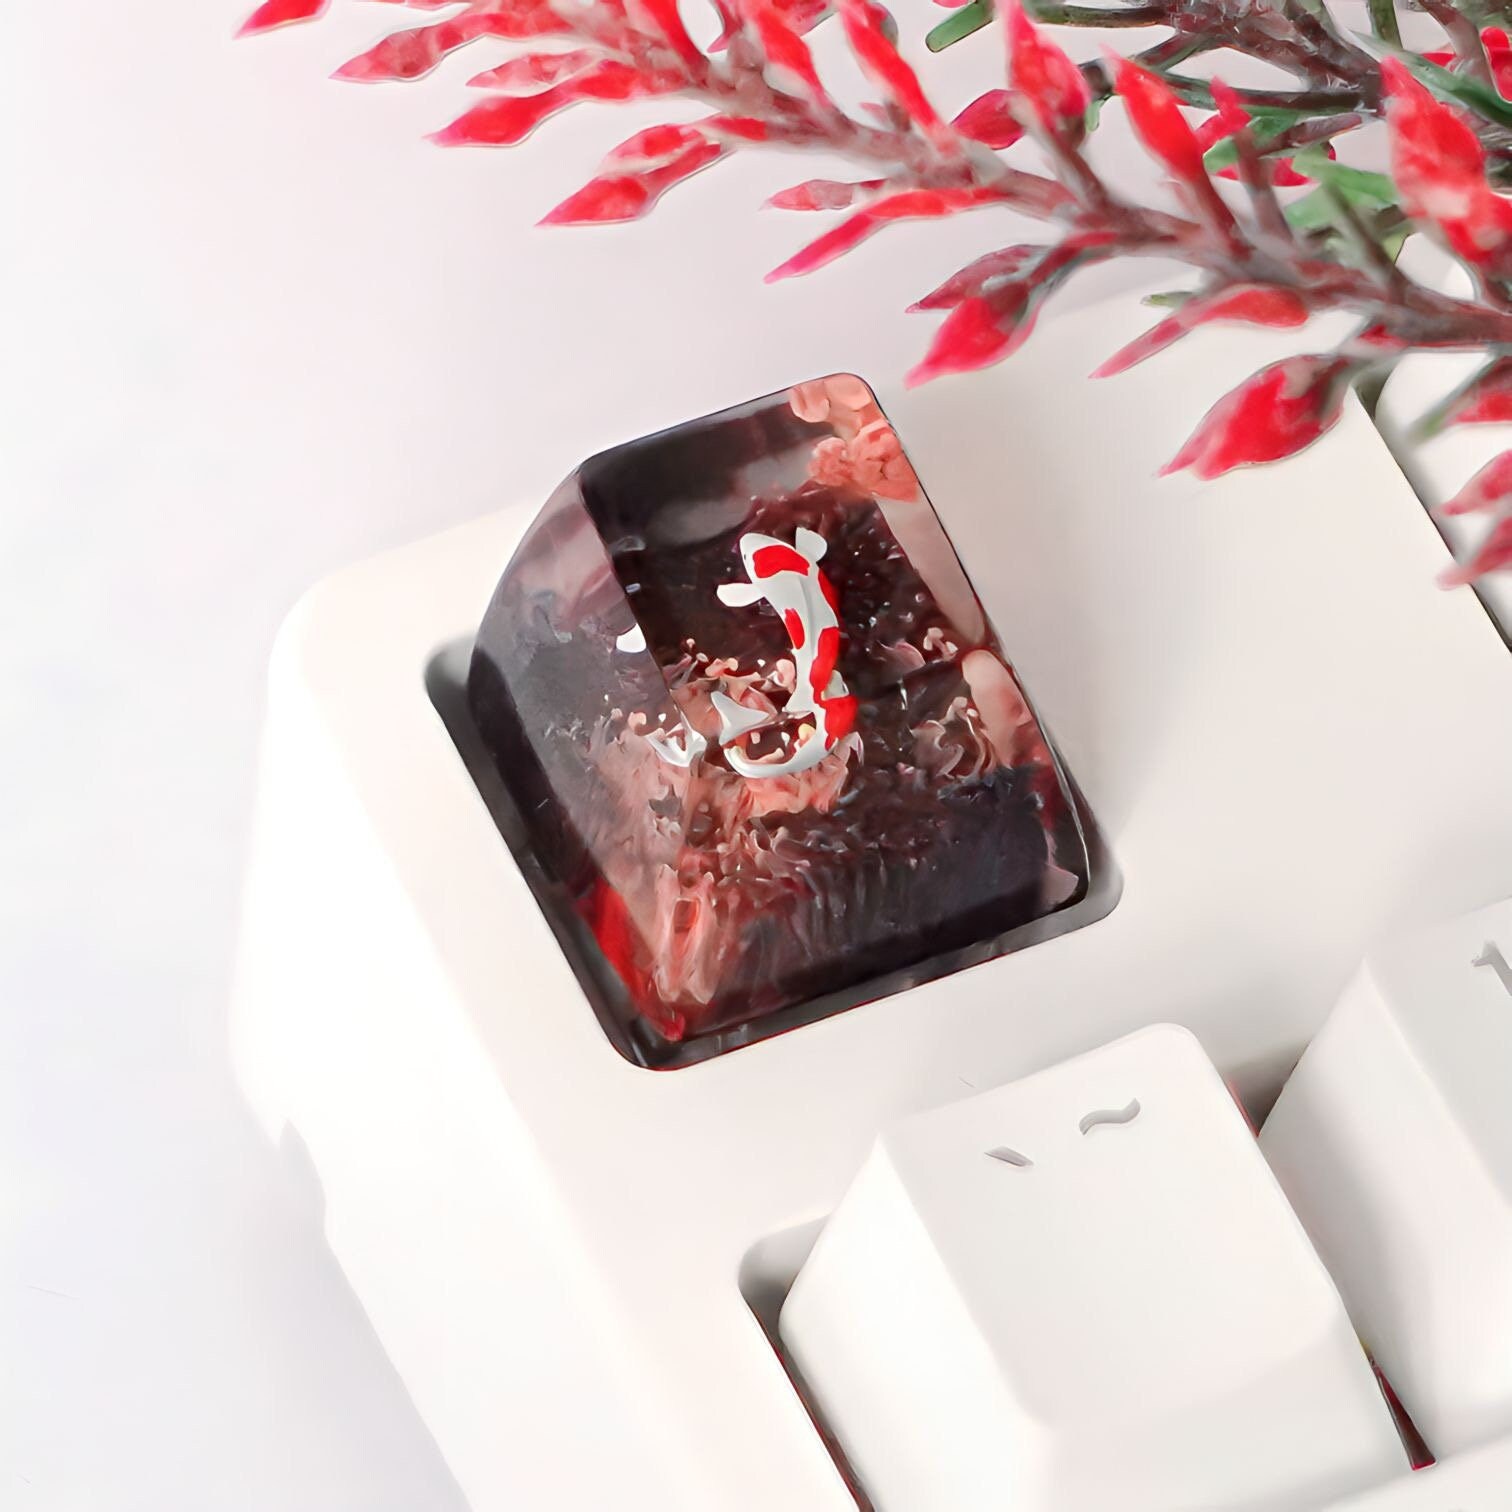 Koi Fish Keycap, Red and Black Koi, Artisan Keycap, Resin Keycap, Keycap for MX Cherry Switches, Handmade Gift